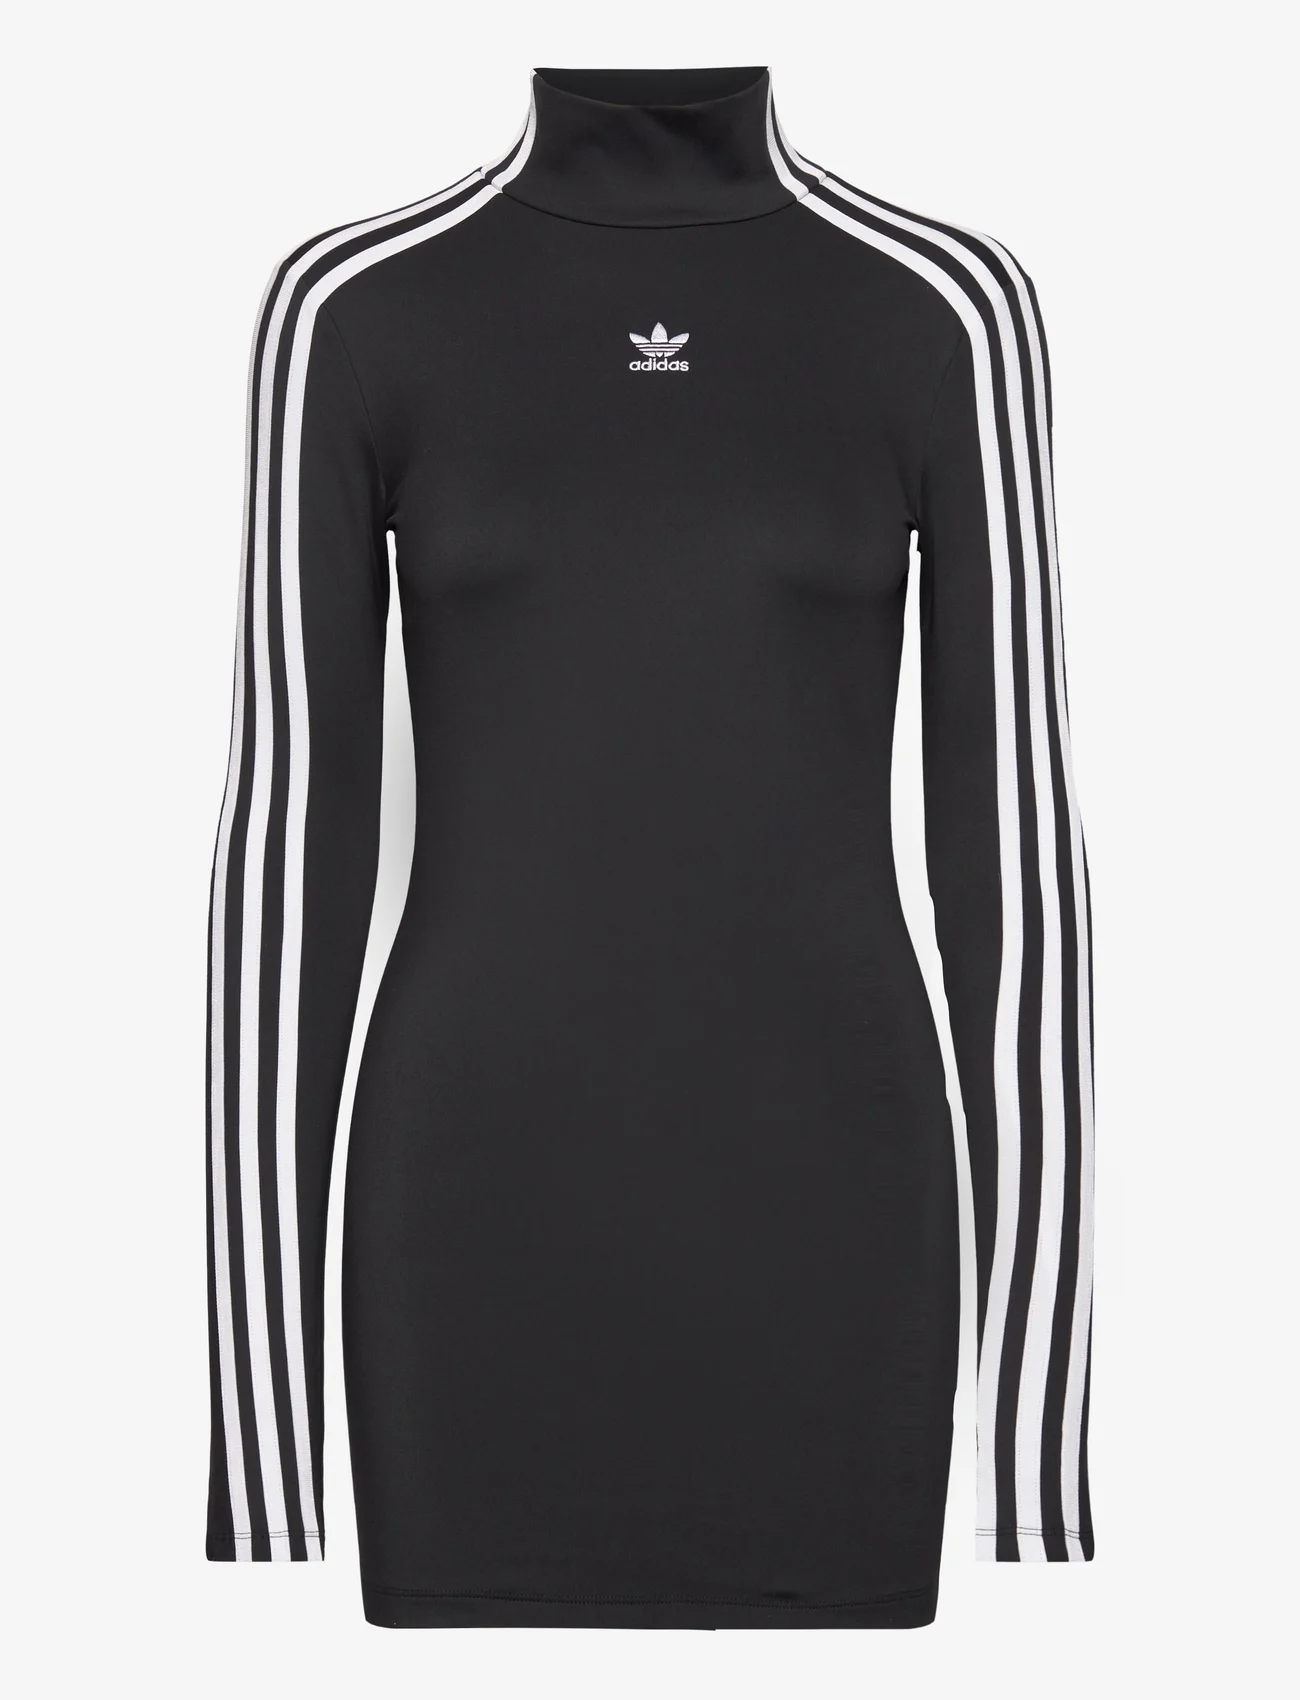 adidas Originals - TIGHT CUT DRESS - sportskjoler - black - 0